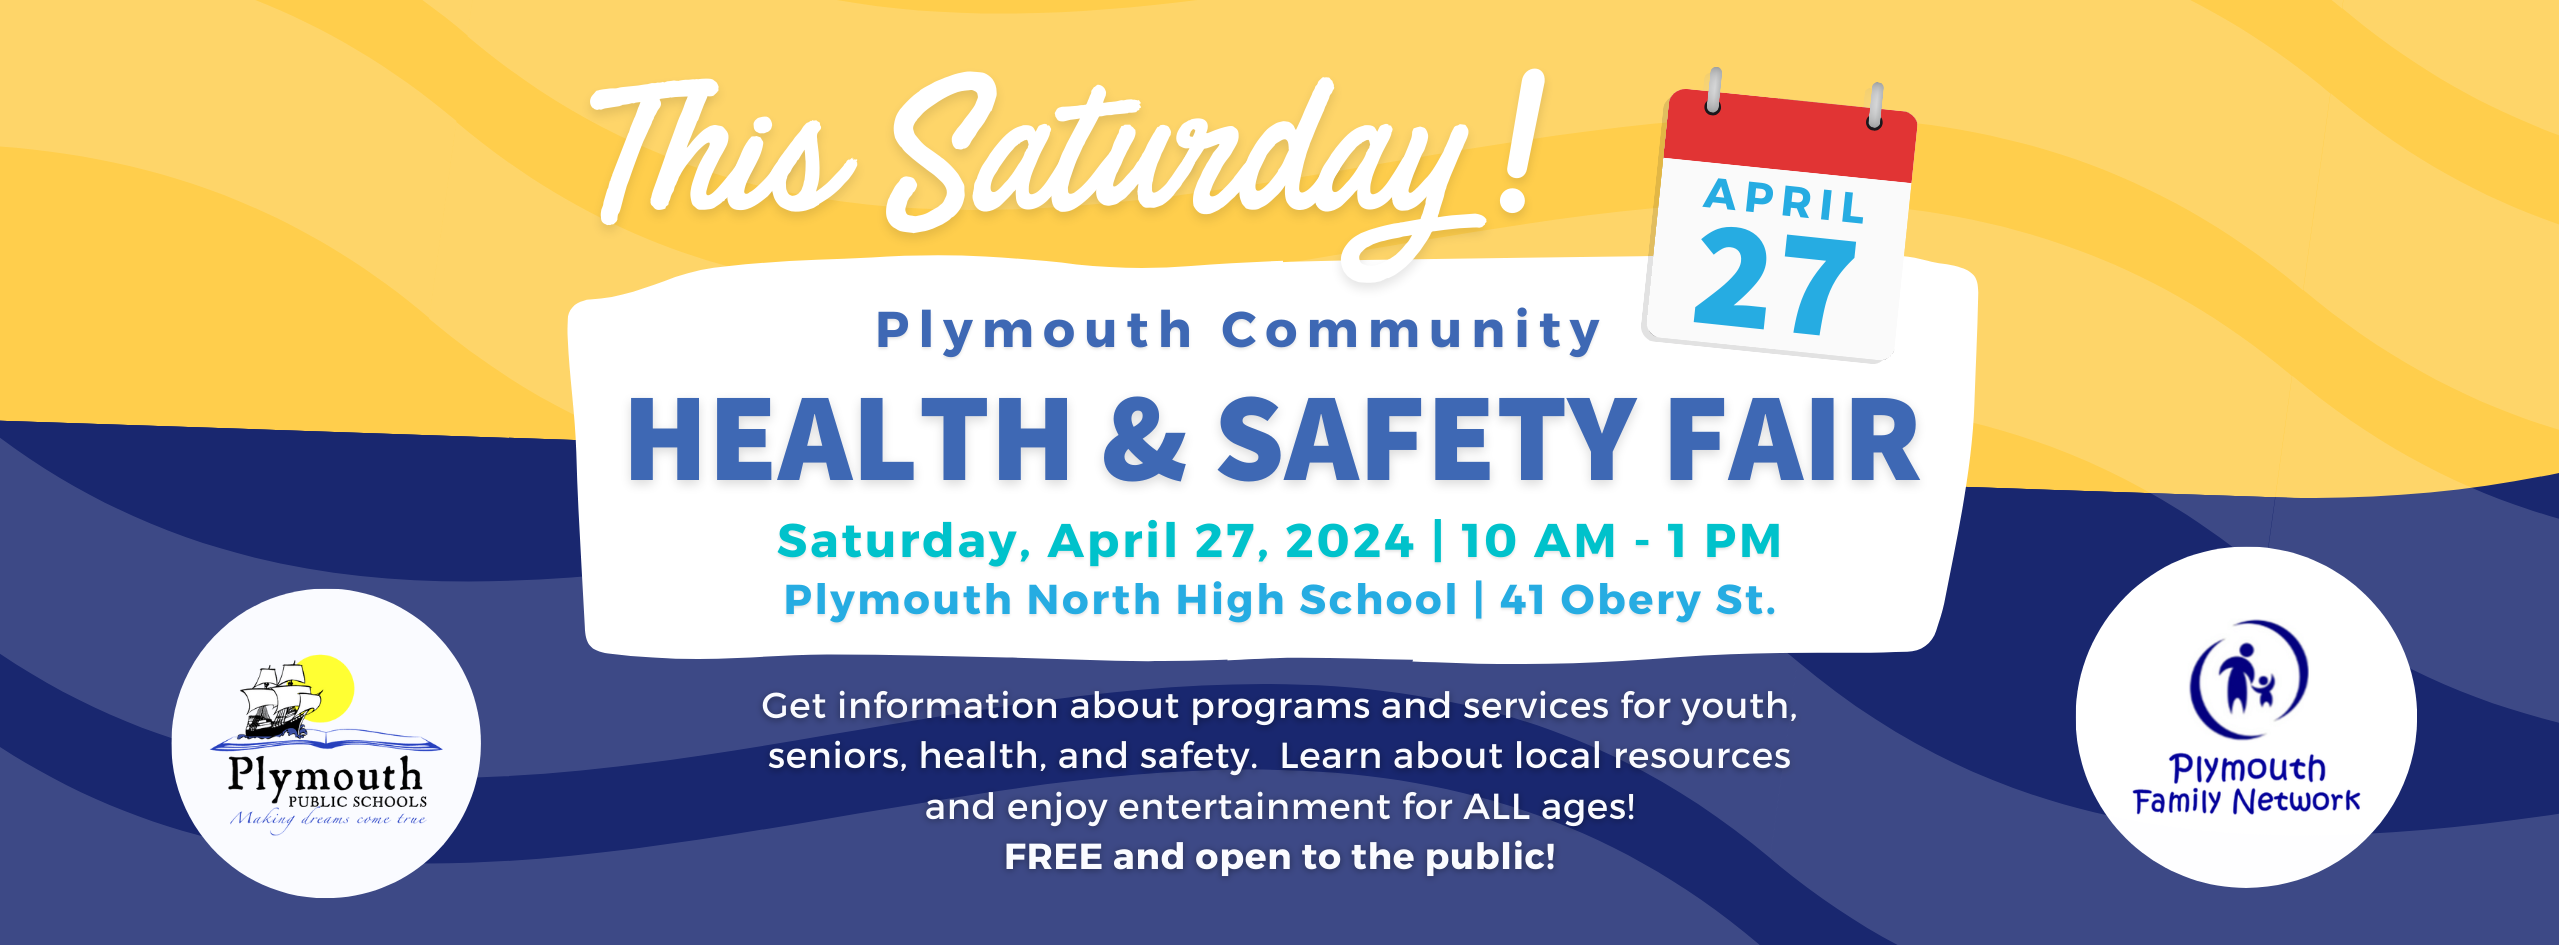 Plymouth Community Health & Safety Fair